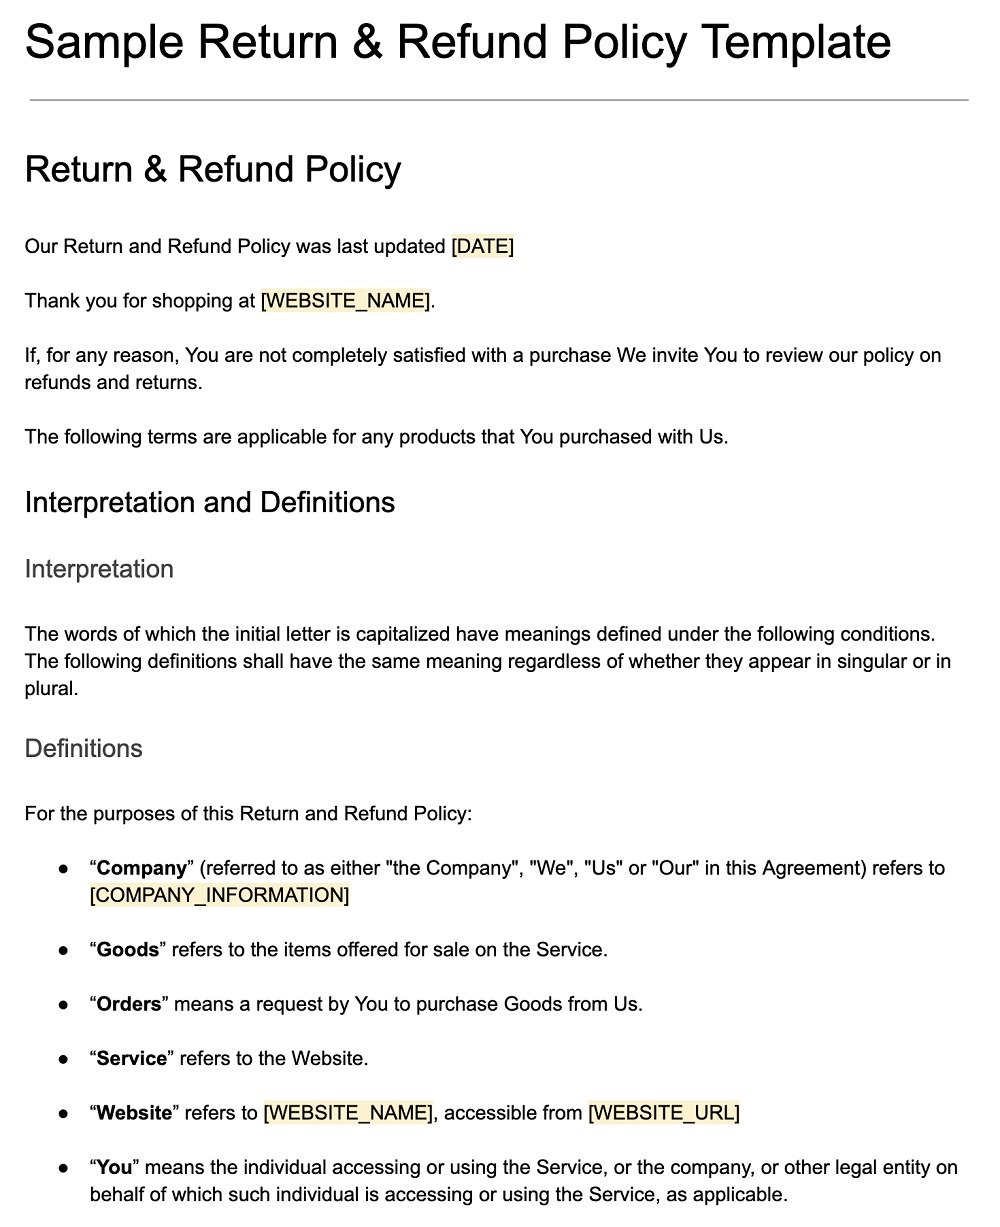 https://www.termsfeed.com/public/uploads/2021/12/sample-return-refund-policy-template-screenshot.jpg